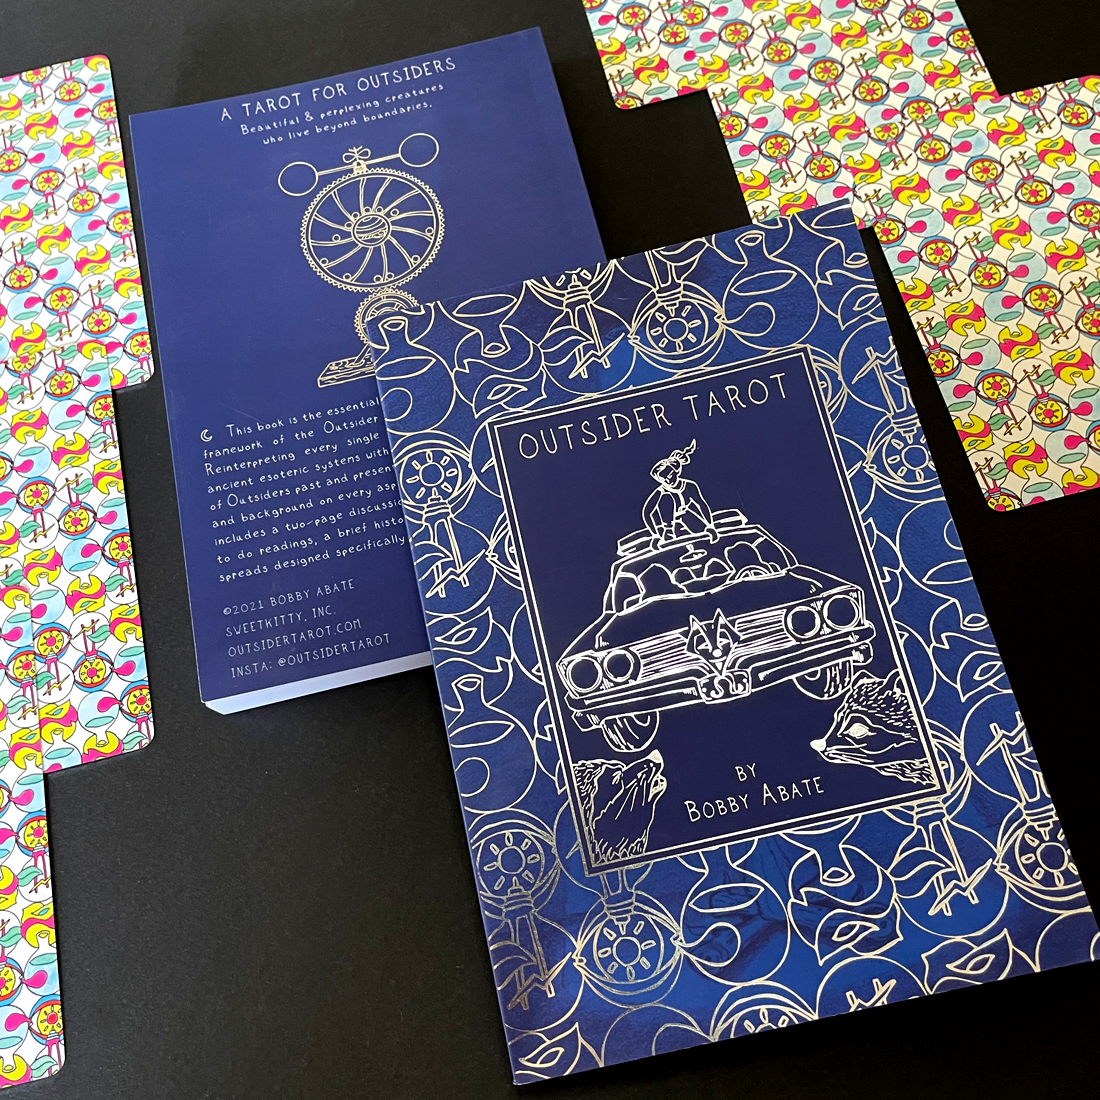 Outsider Tarot guidebook and card backs